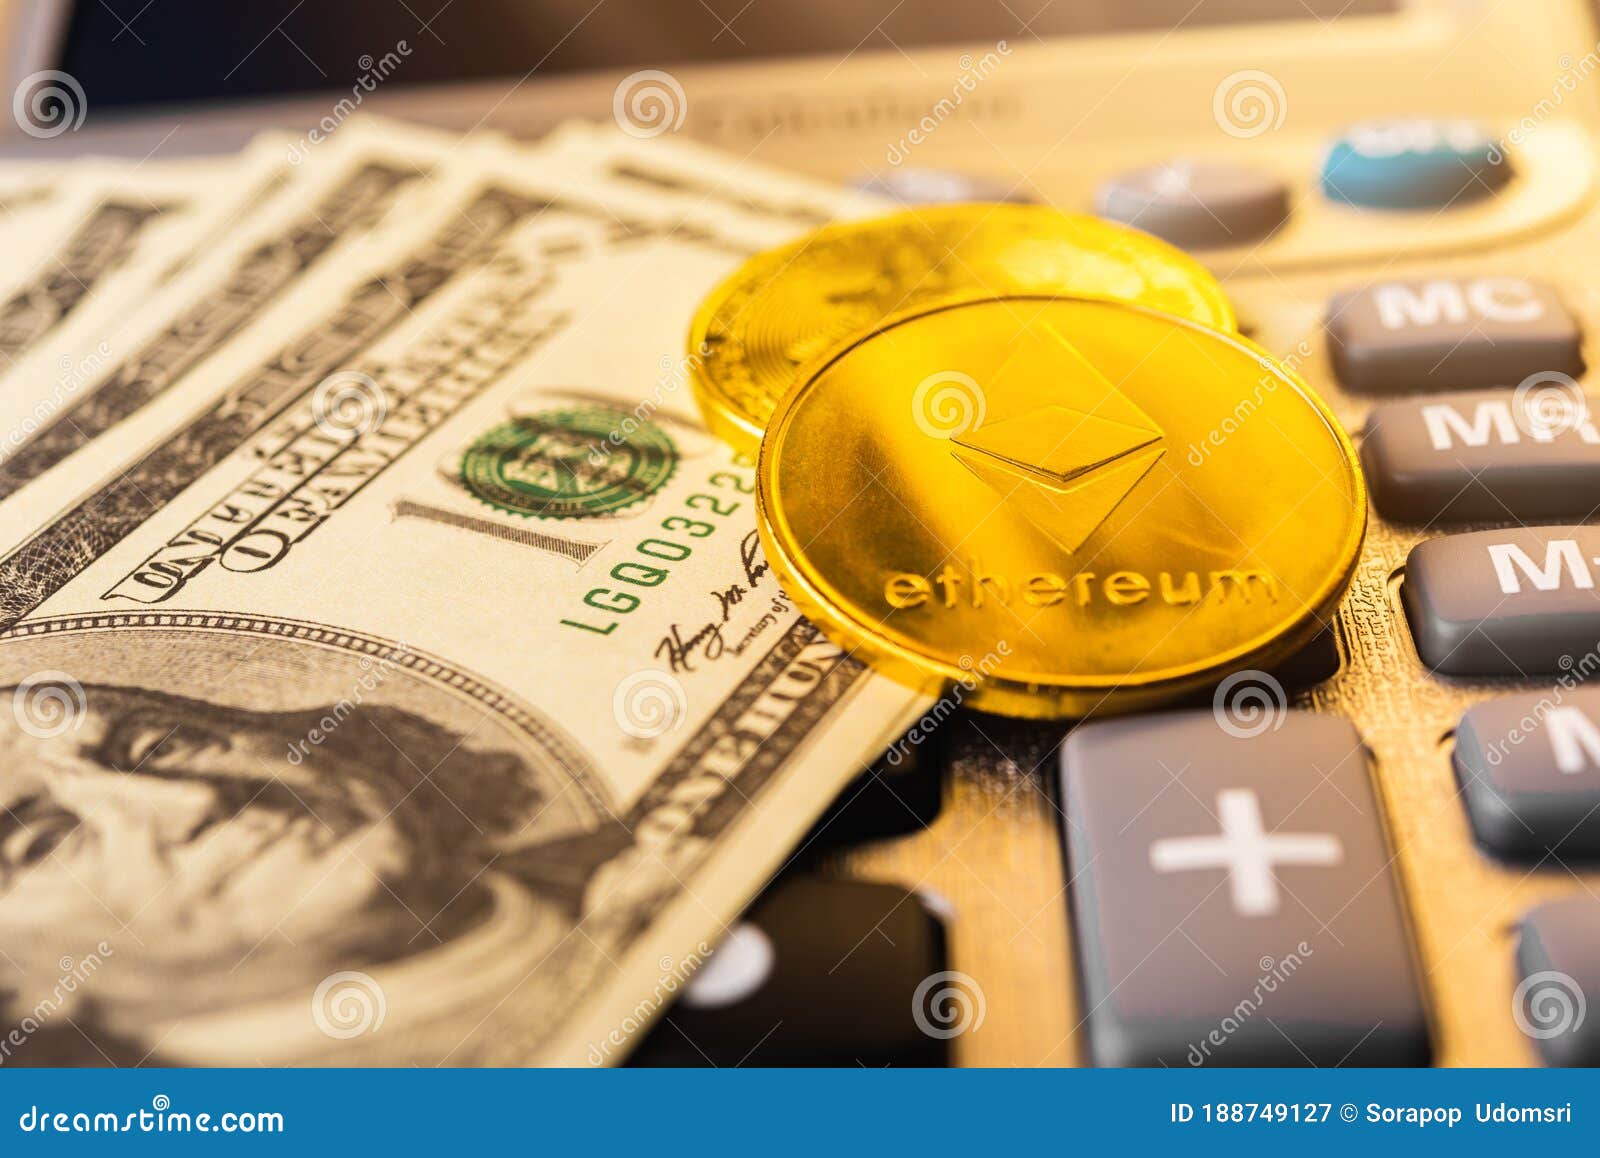 Ethereum currency calculator esting